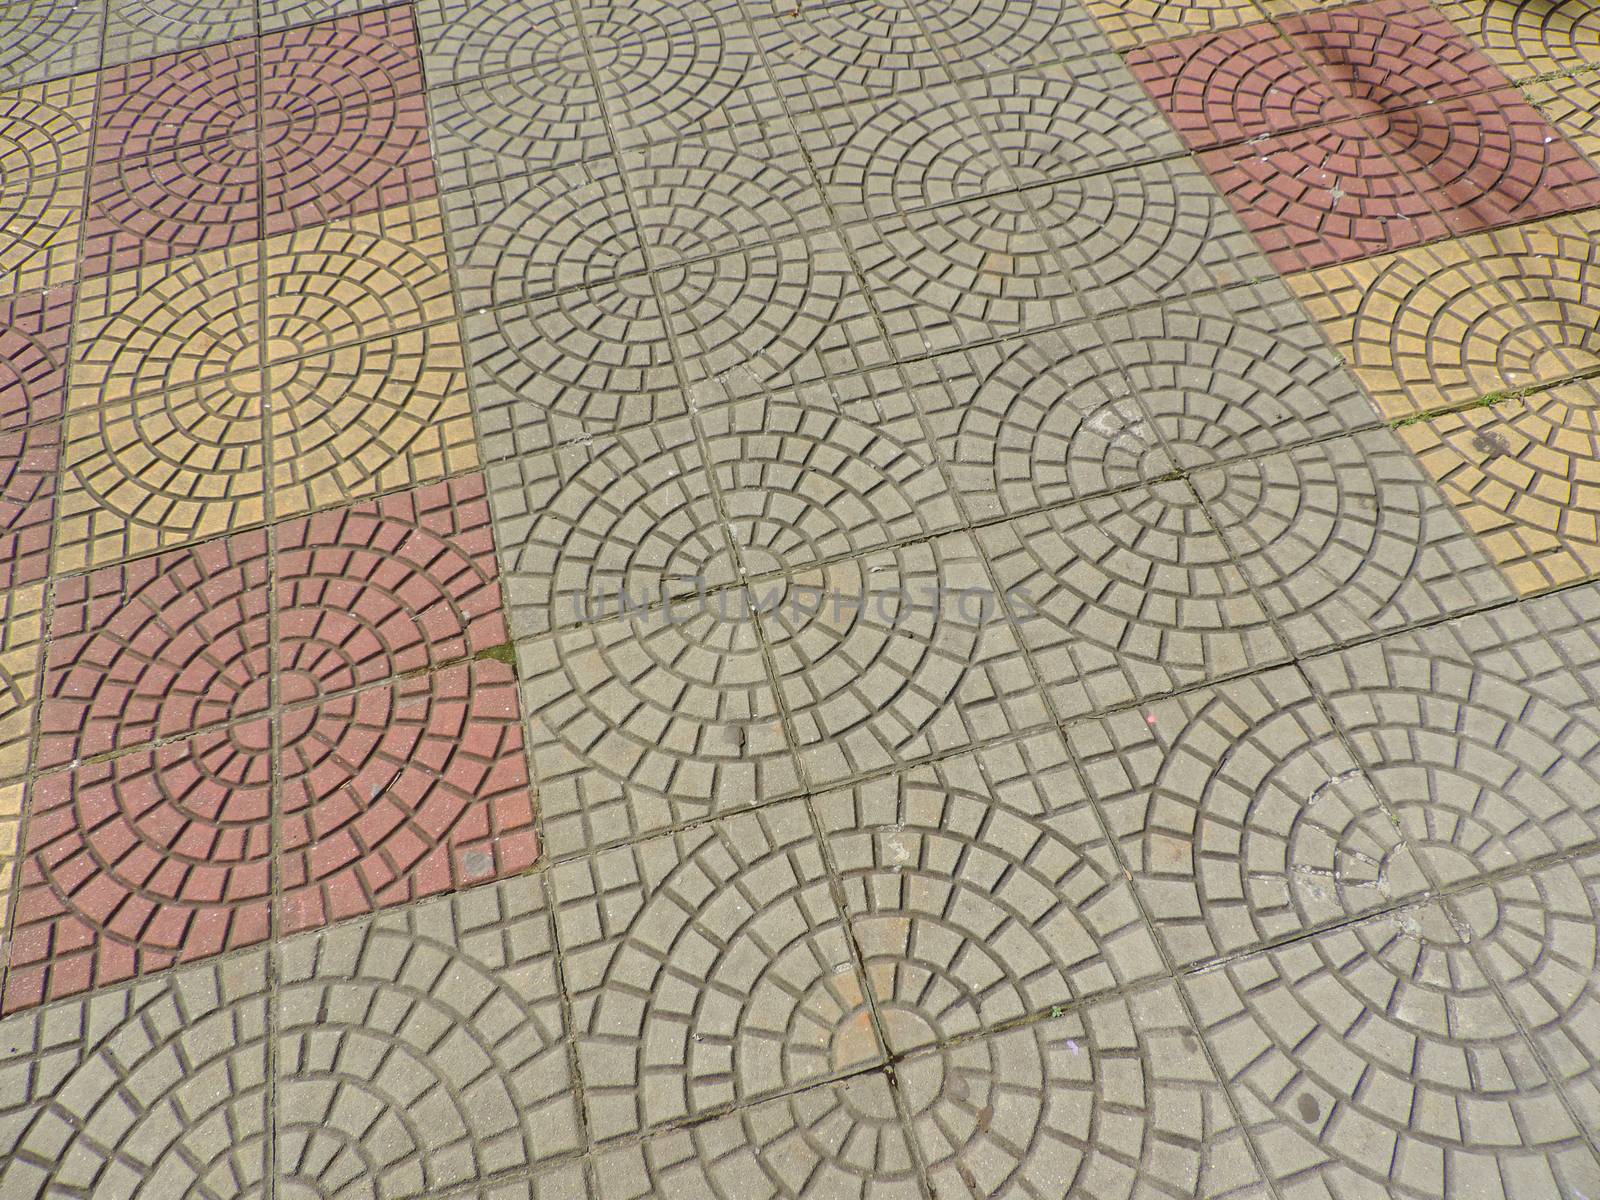 Tiled mosaic concrete pavement by luisrftc